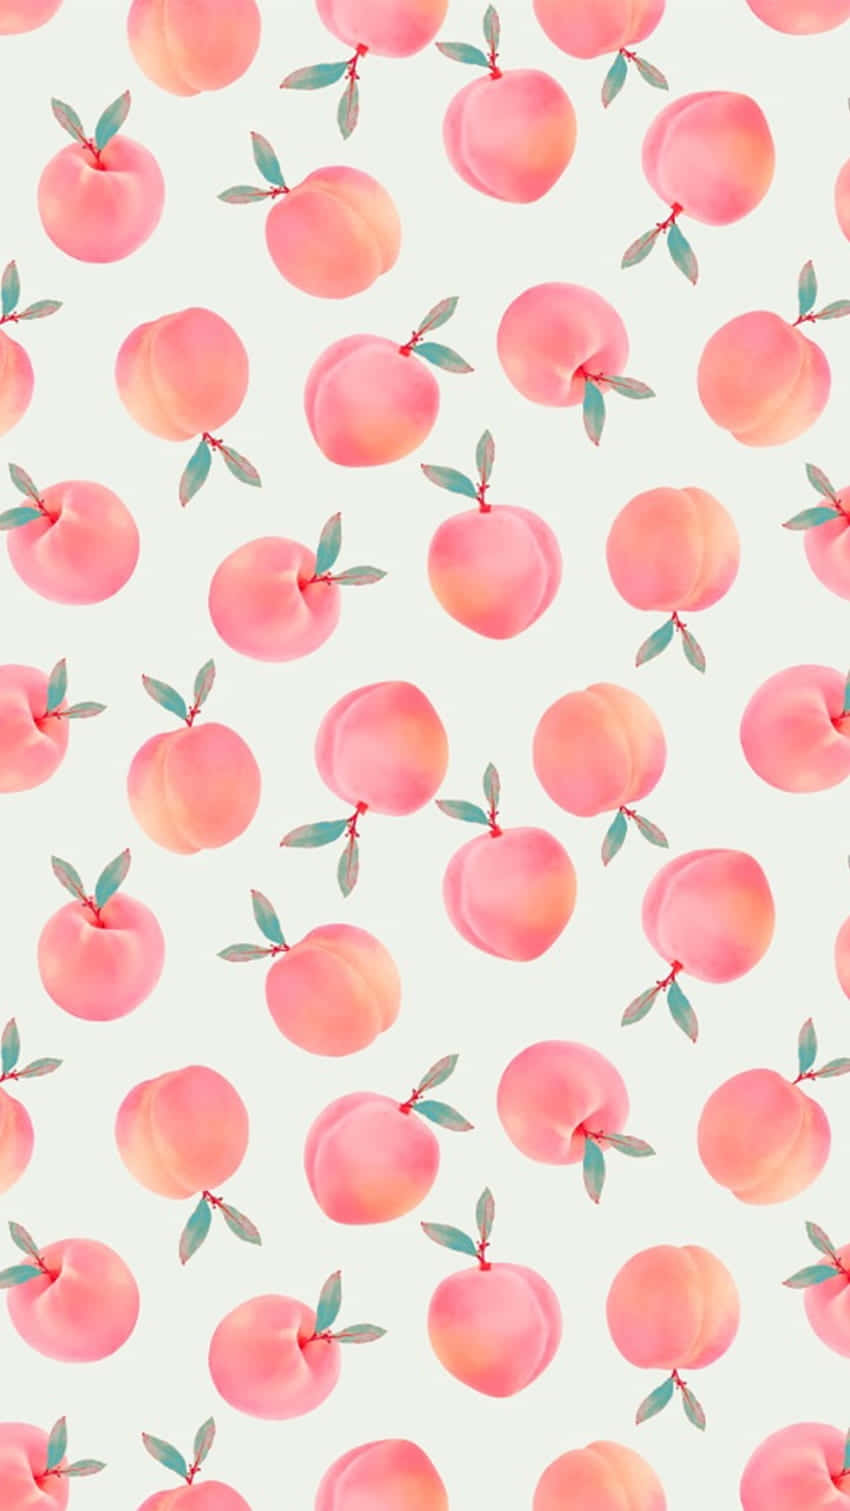 Have a Cute Peachy Day! Wallpaper